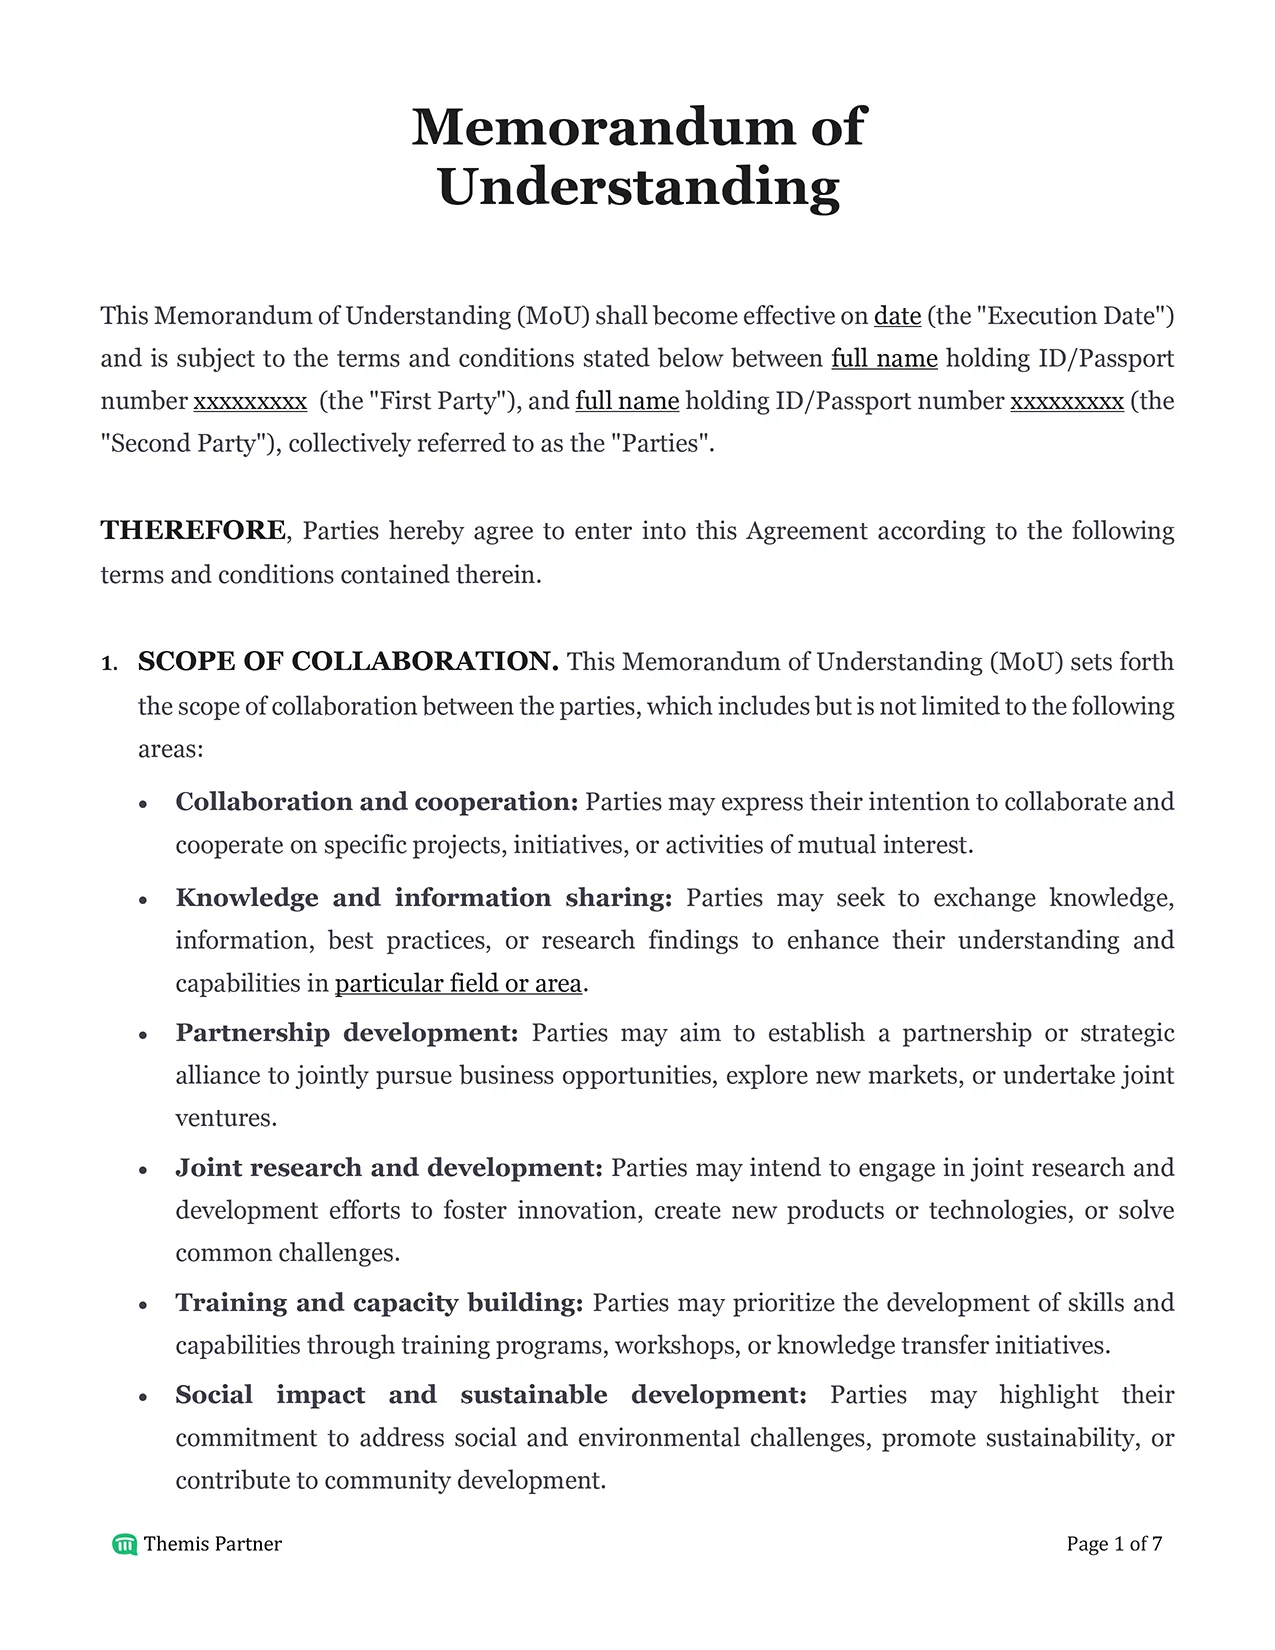 Memorandum of understanding Singapore 1